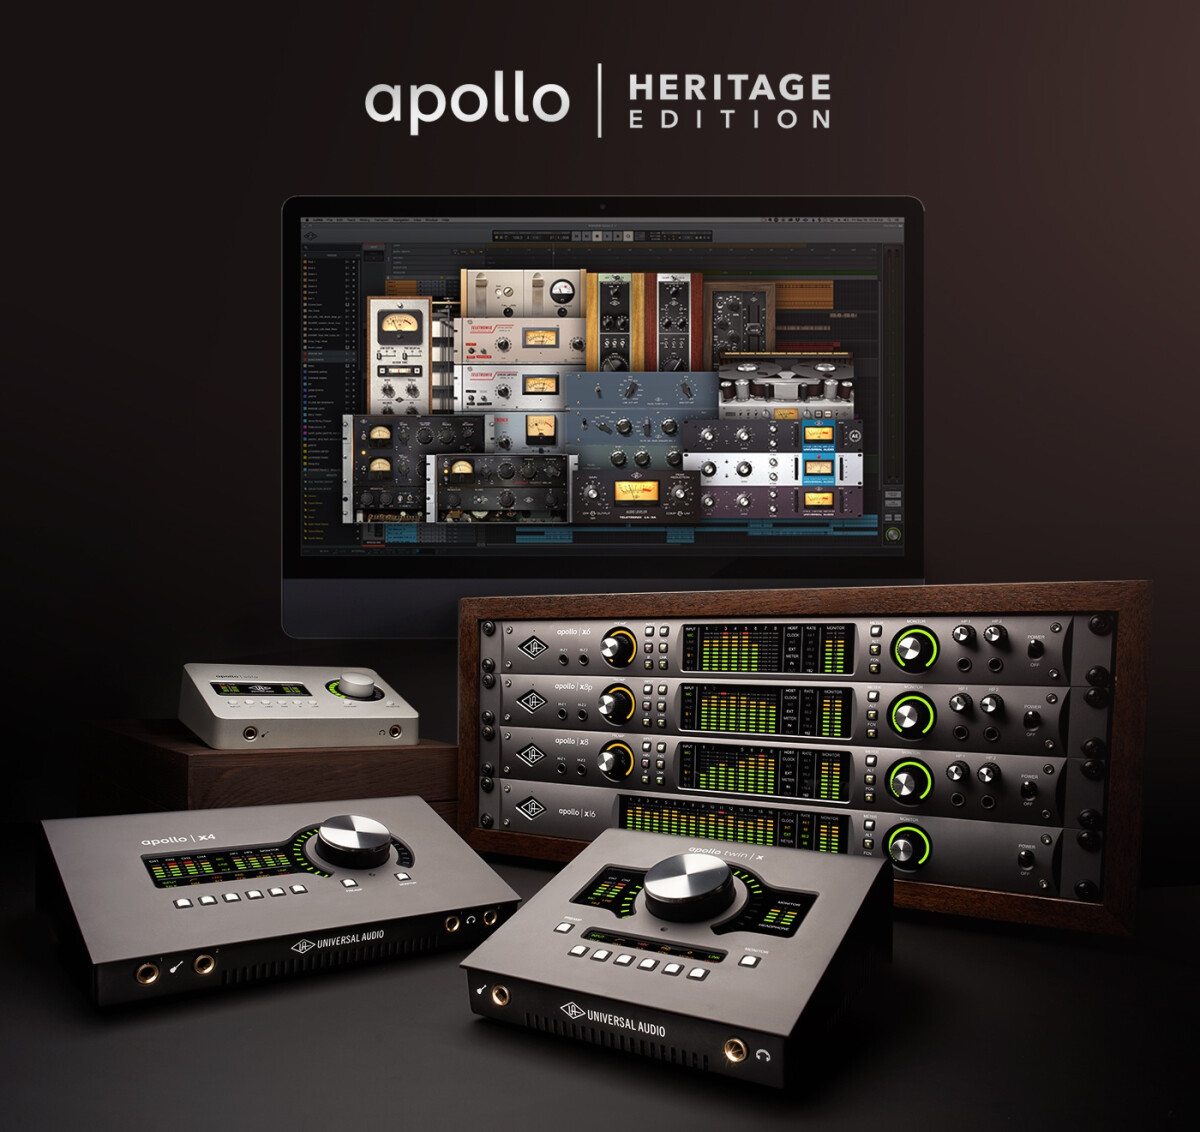 Universal Audio lance les interfaces Apollo Heritage Edition